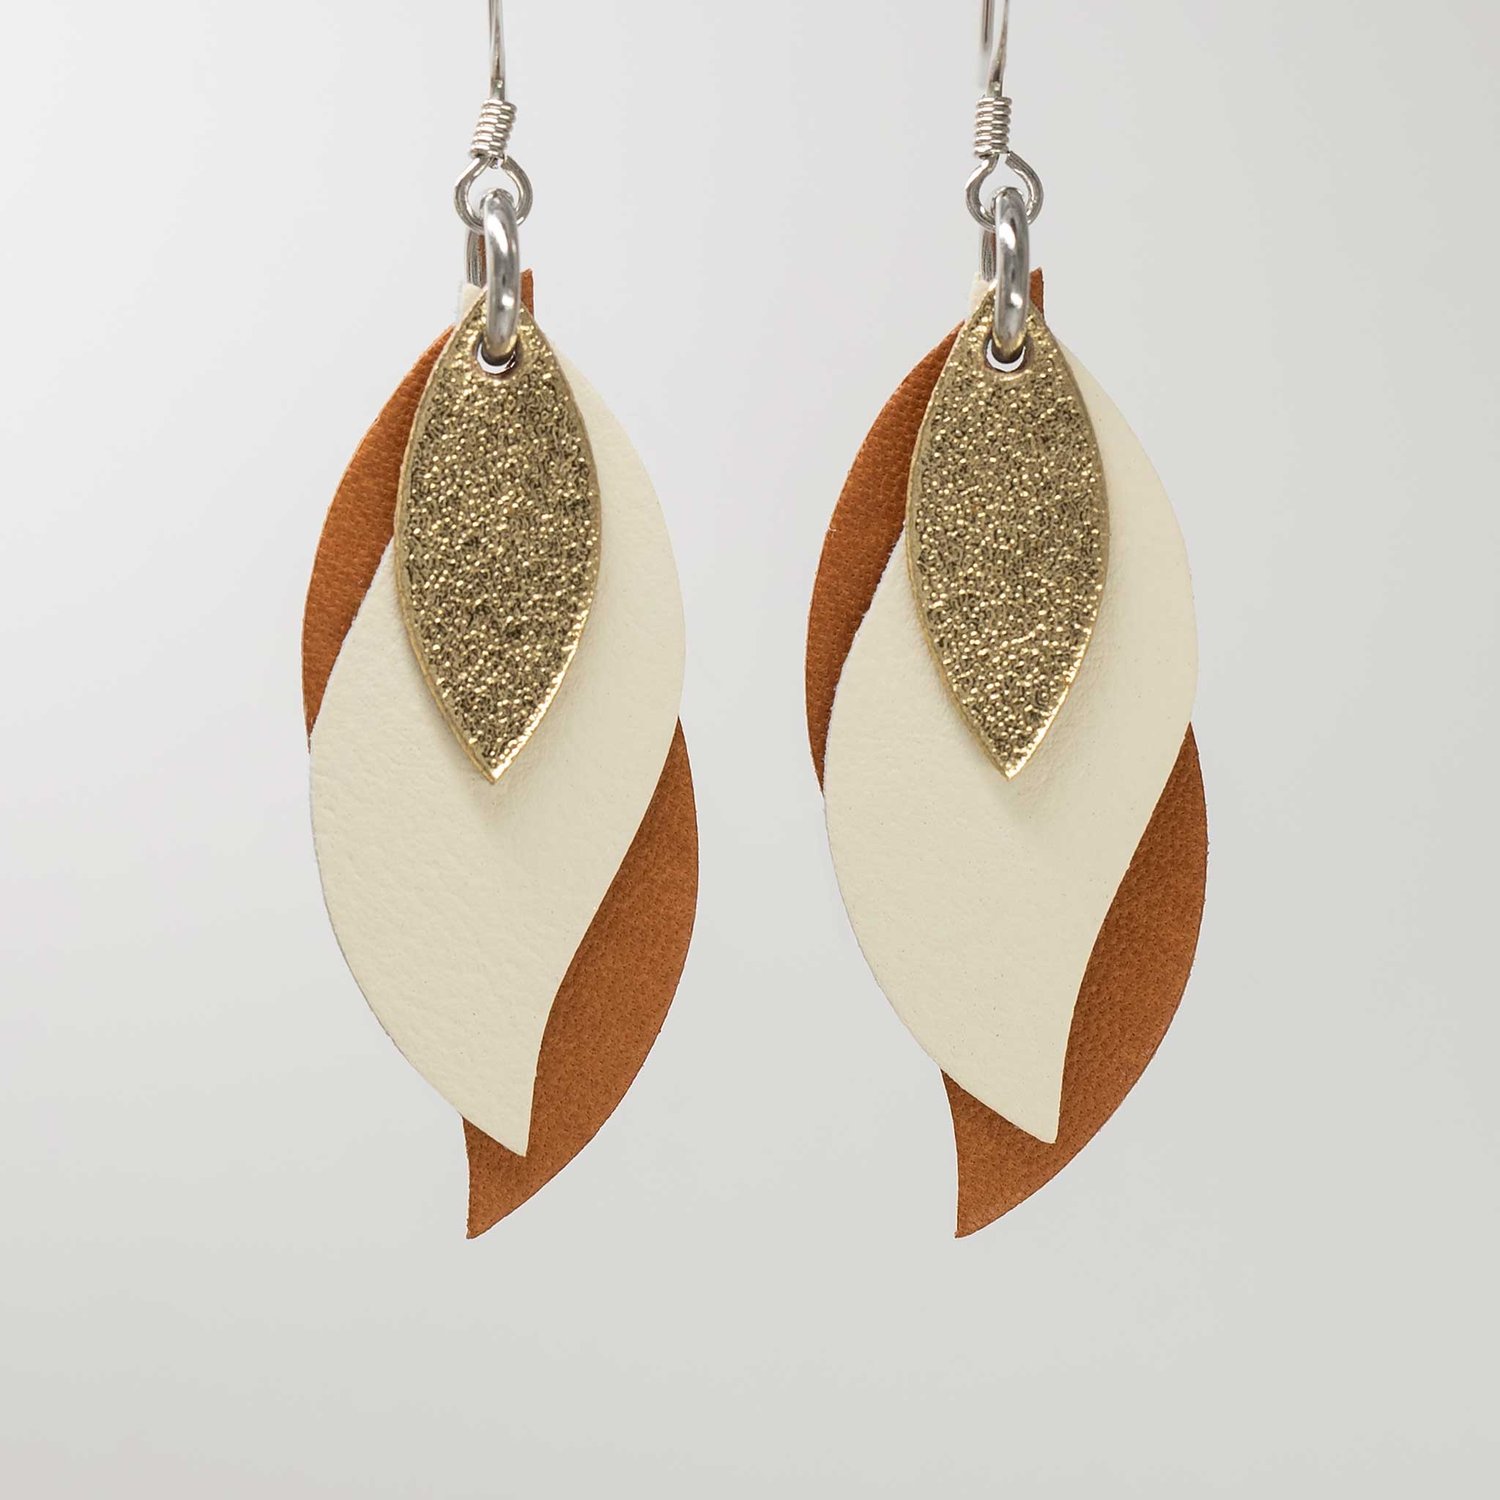 Image of Handmade Australian leather leaf earrings - Gold, cream, brown [LGC-208]